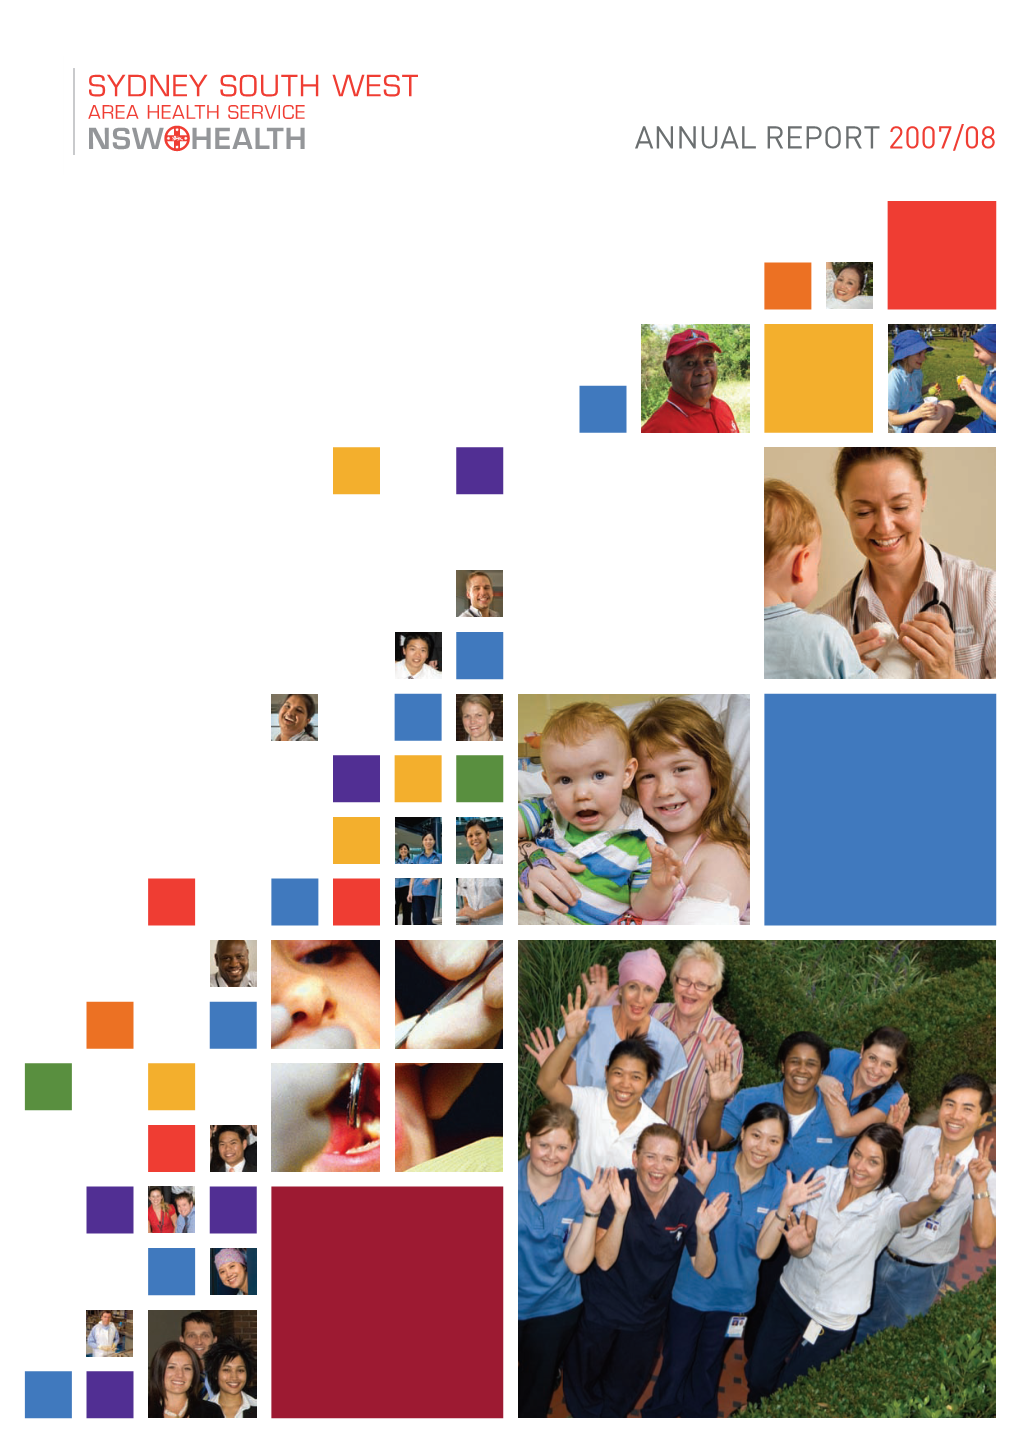 2007-08 Annual Report